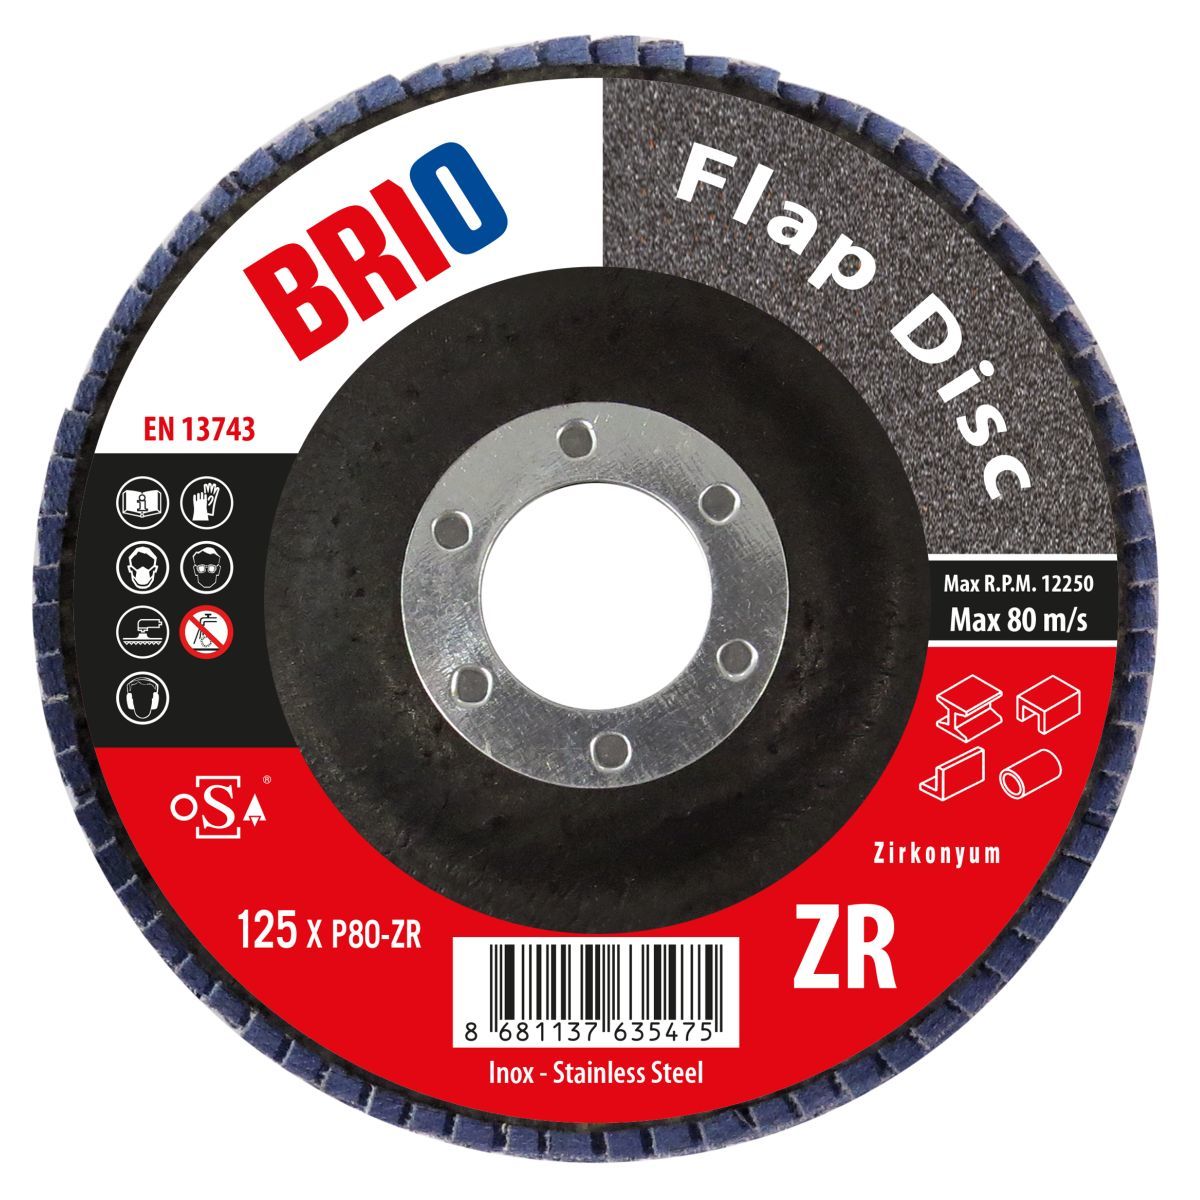 Brio Flap Disk 125XP80 Zr